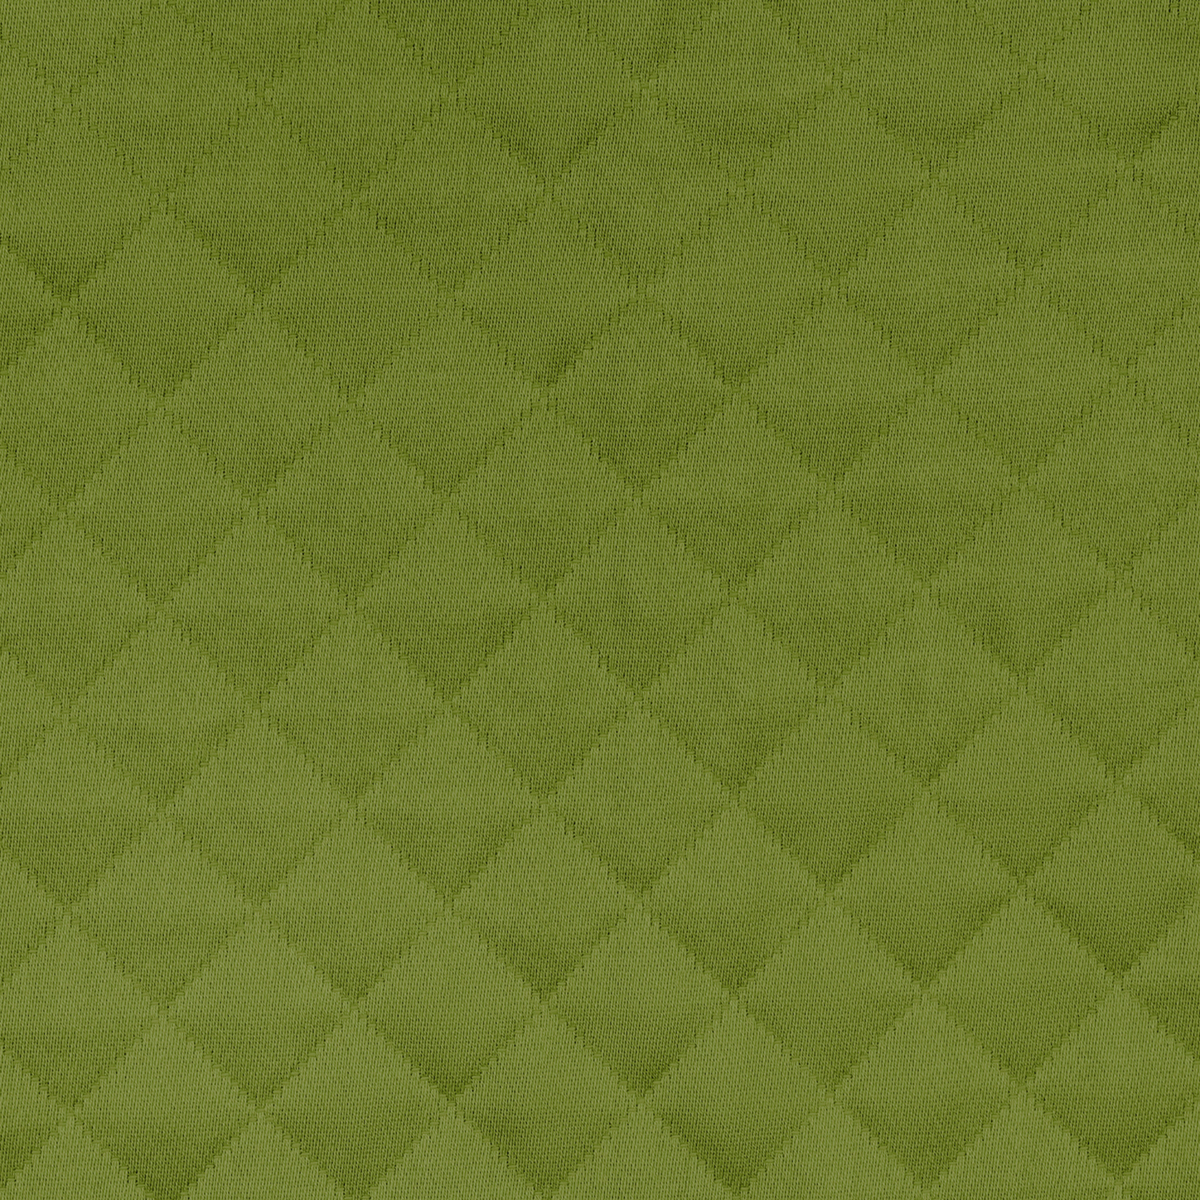 Closeup of Matouk Petra Bedding’s Fabric in Color Grass